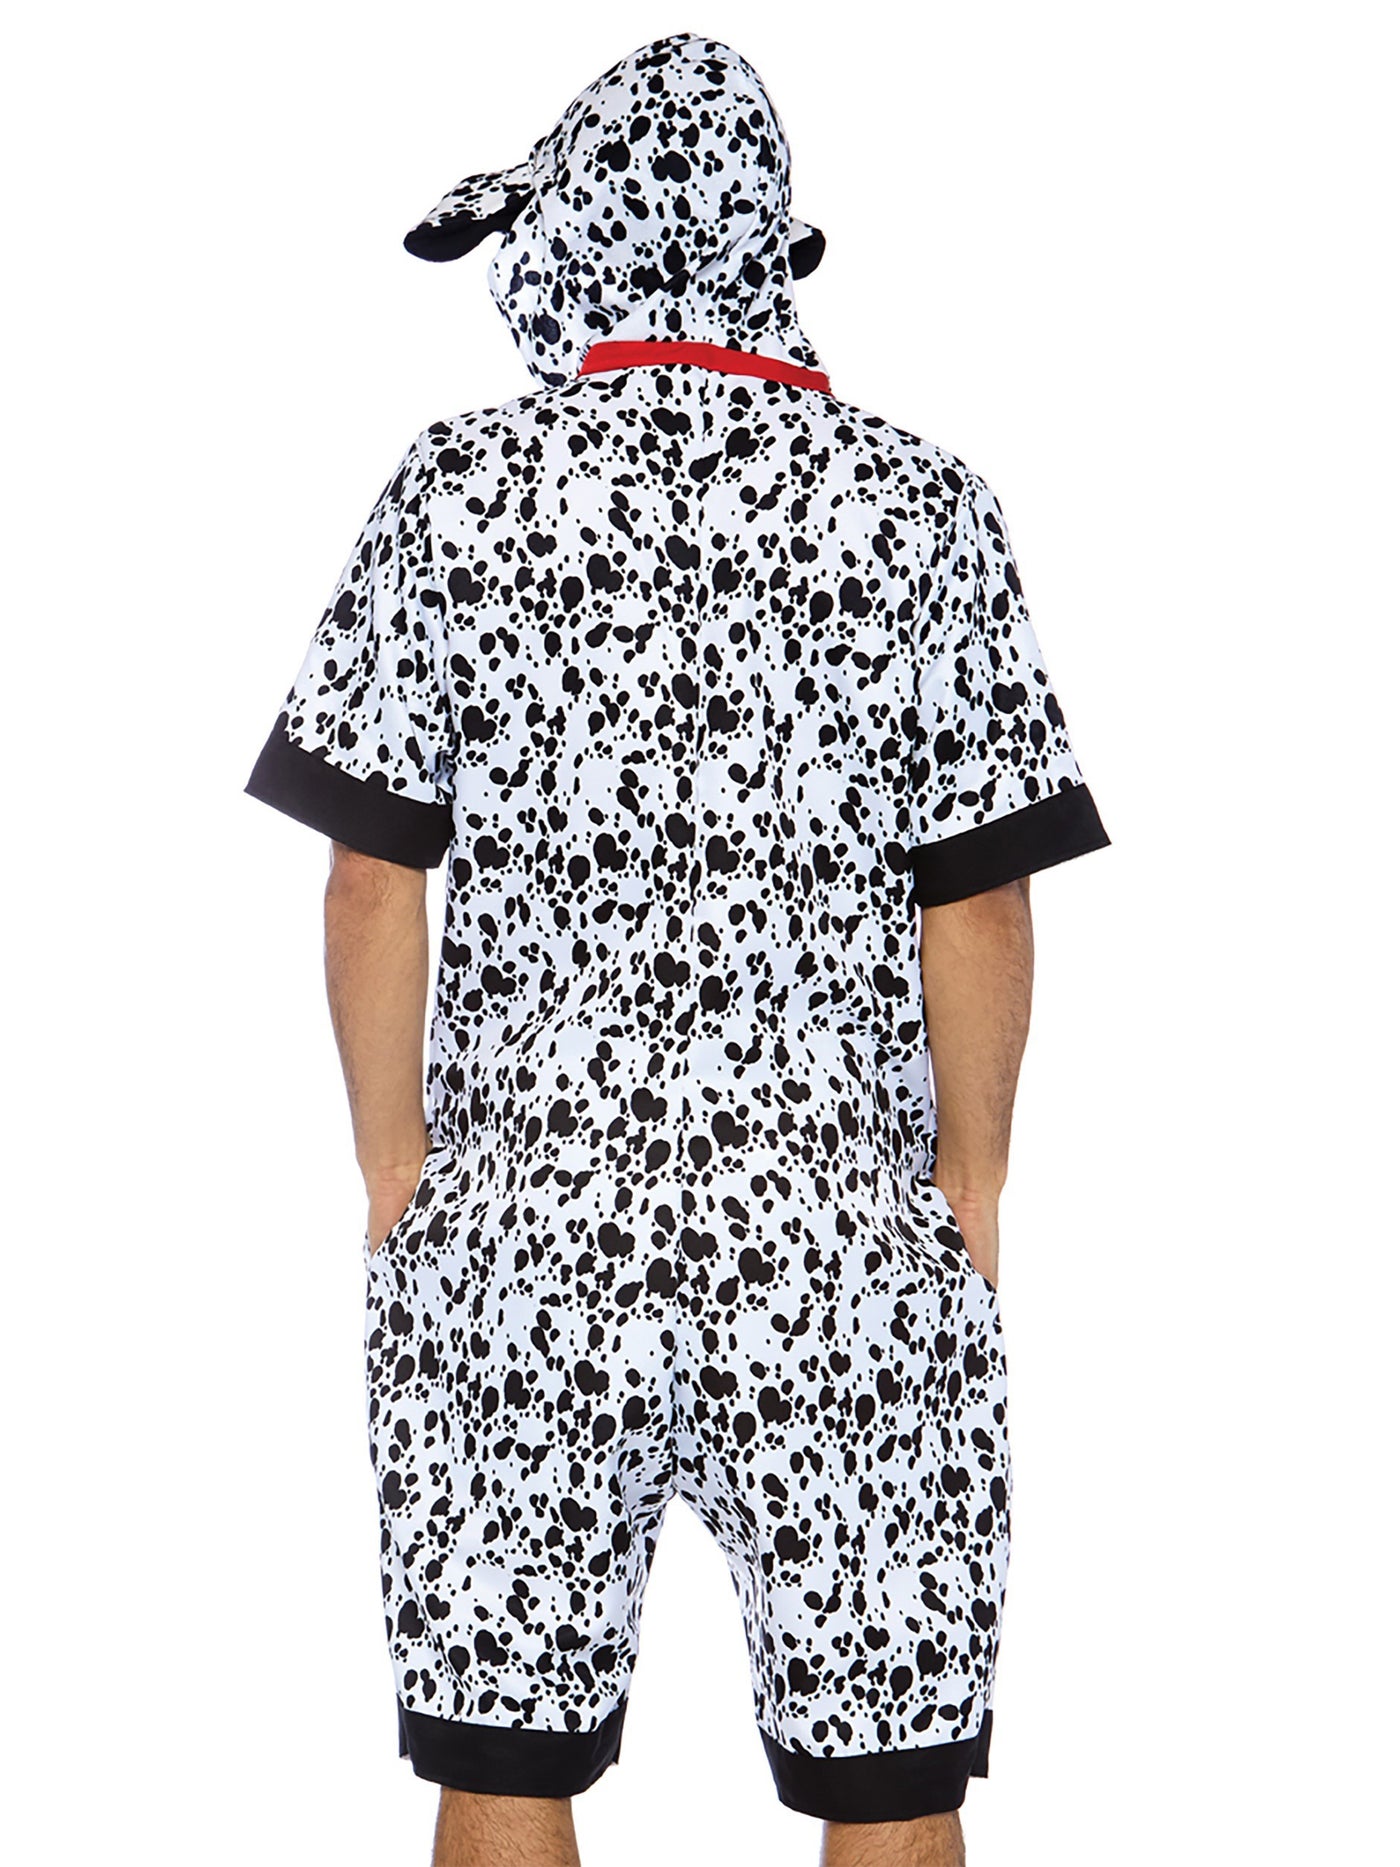 Dalmatian Dog Animal Onesie Mens Costume - Shop Fortune Costumes Lingerie